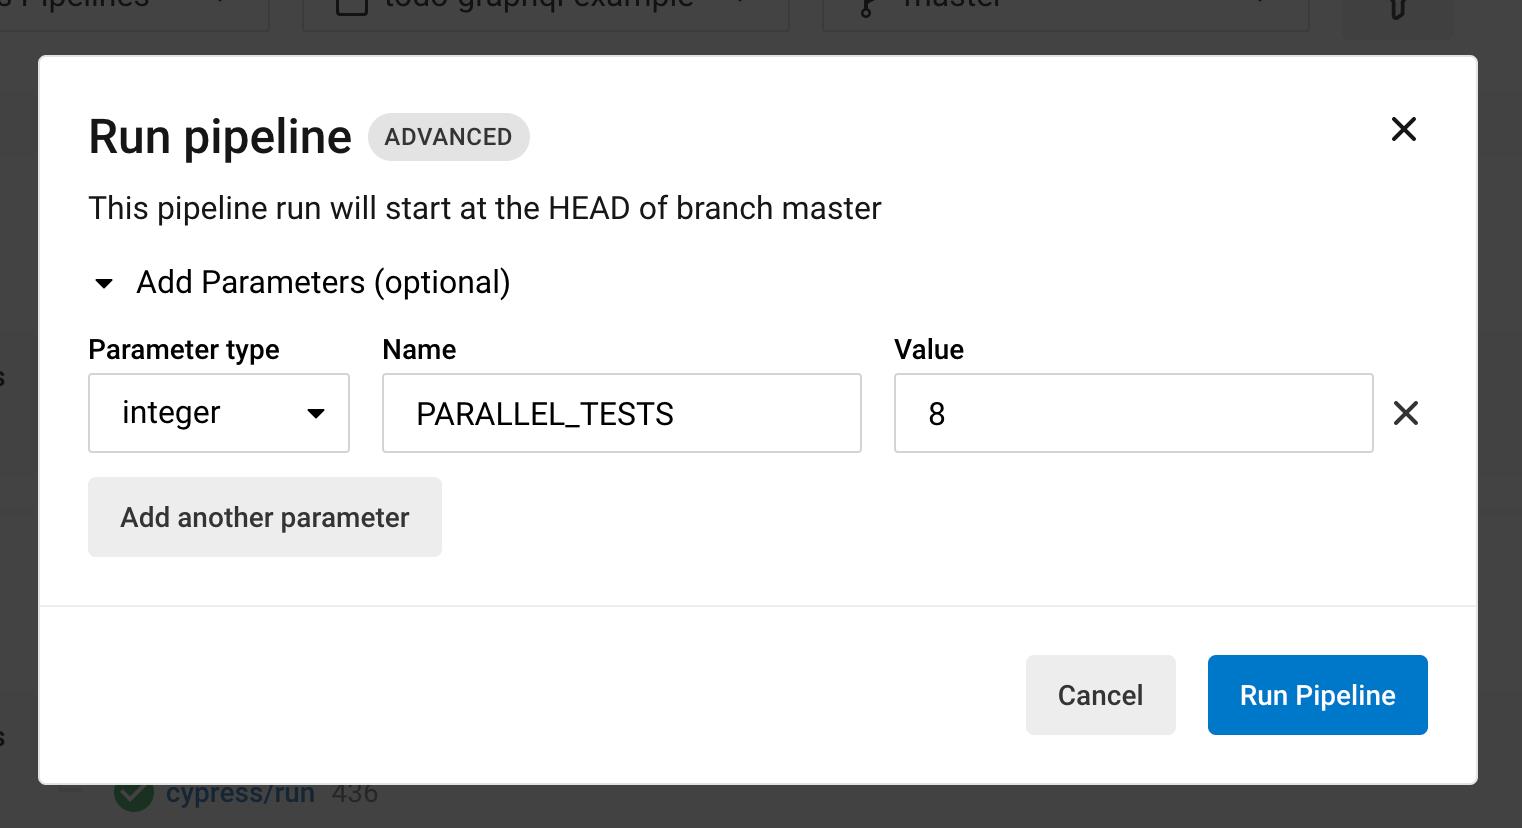 Enter the PARALLEL_TESTS number